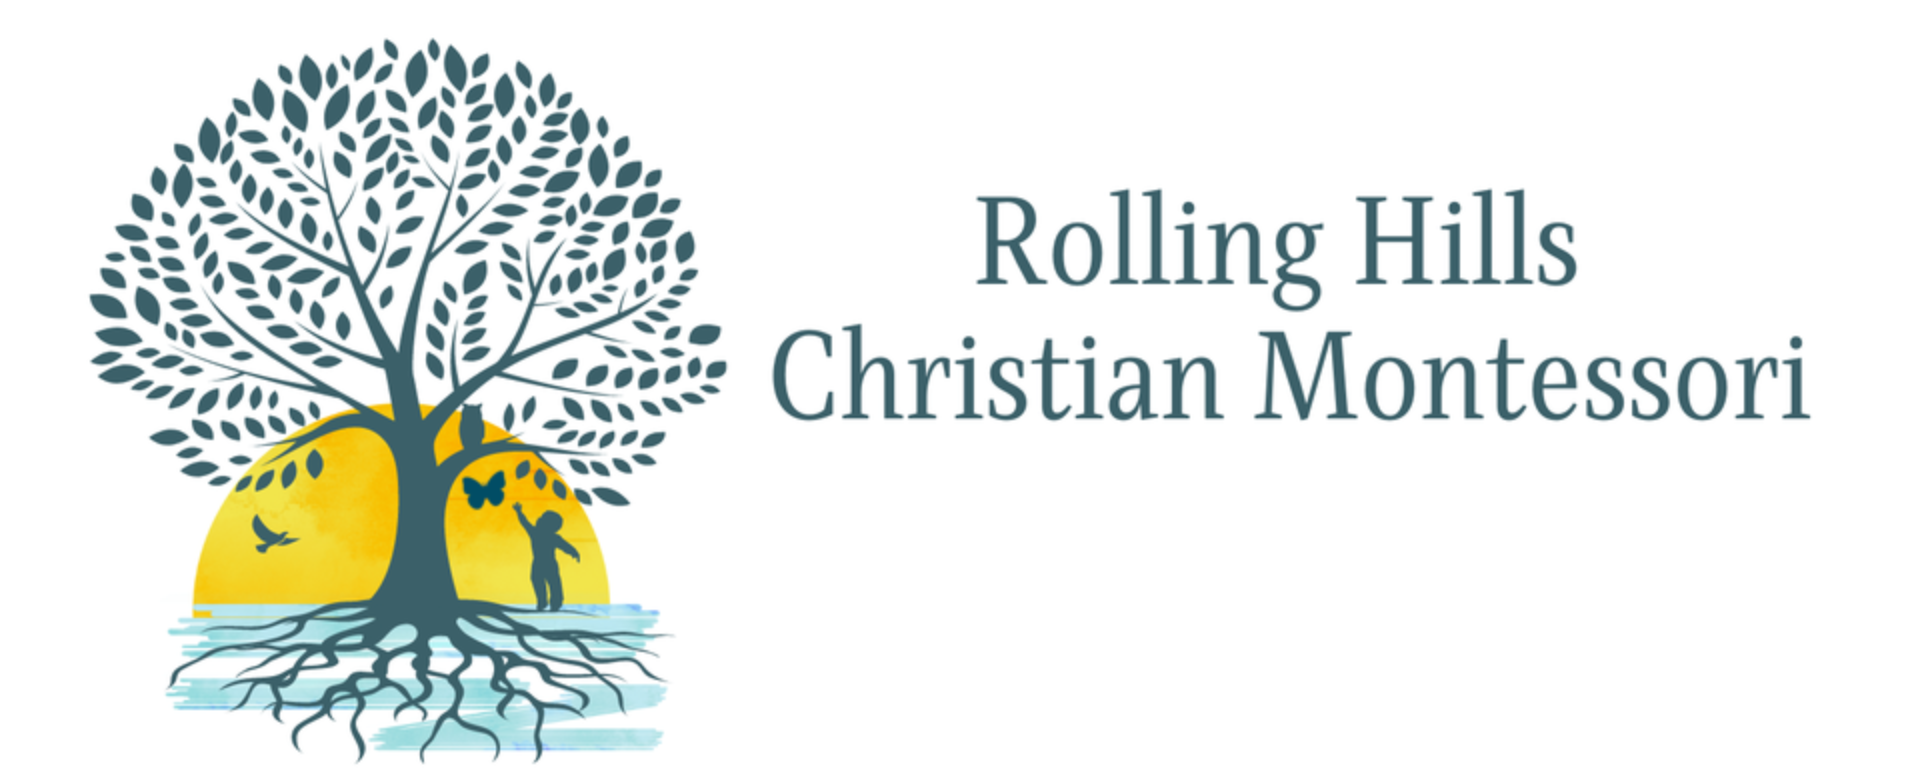 Rolling Hills Christian Montessori School